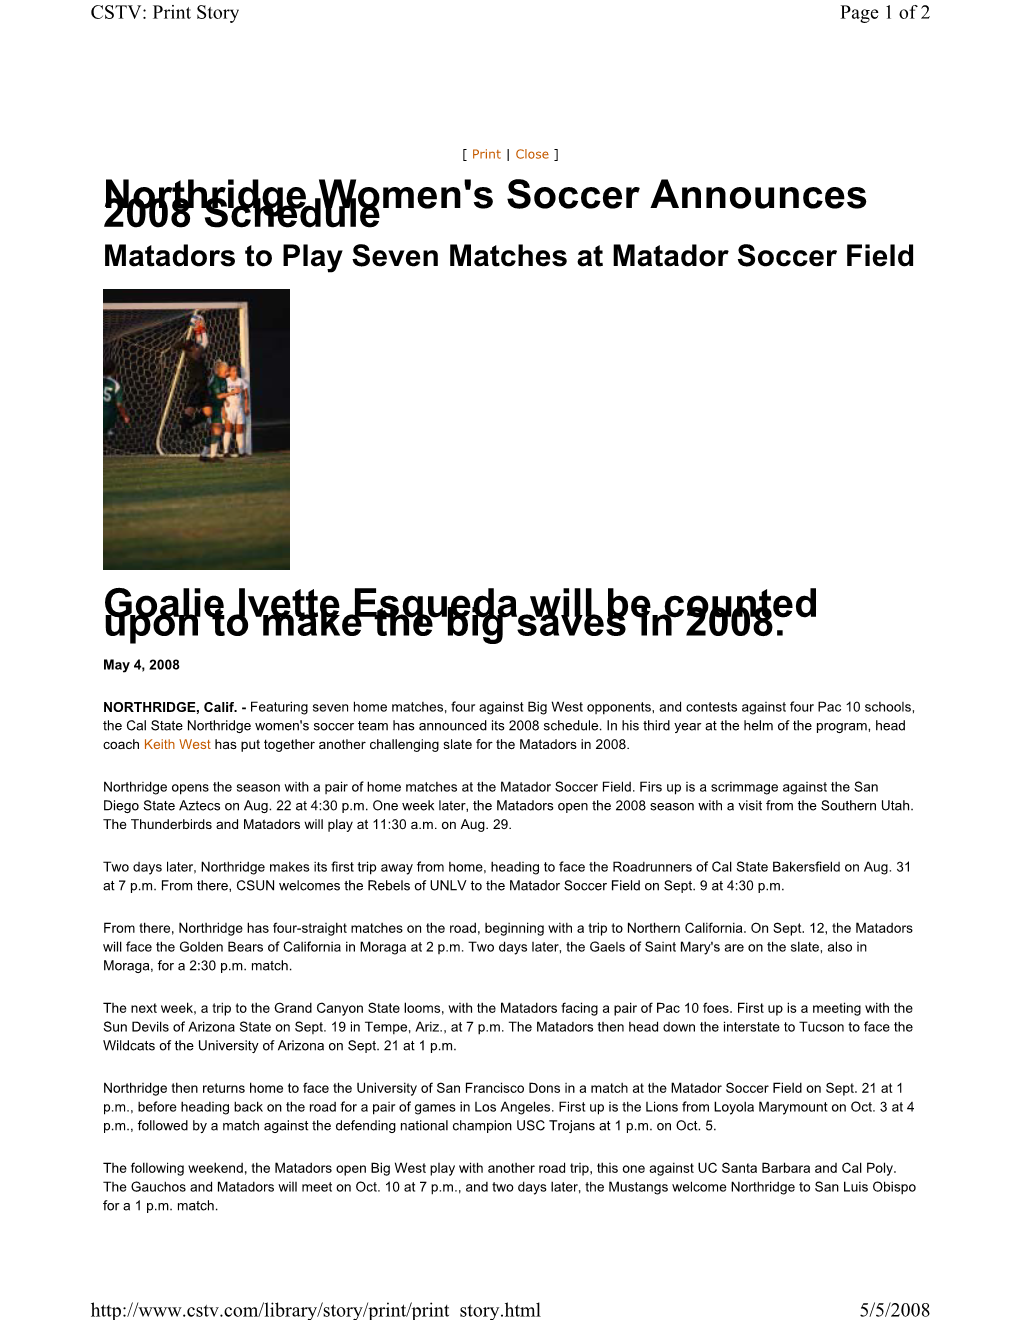 Northridge Women's Soccer Announces 2008 Schedule